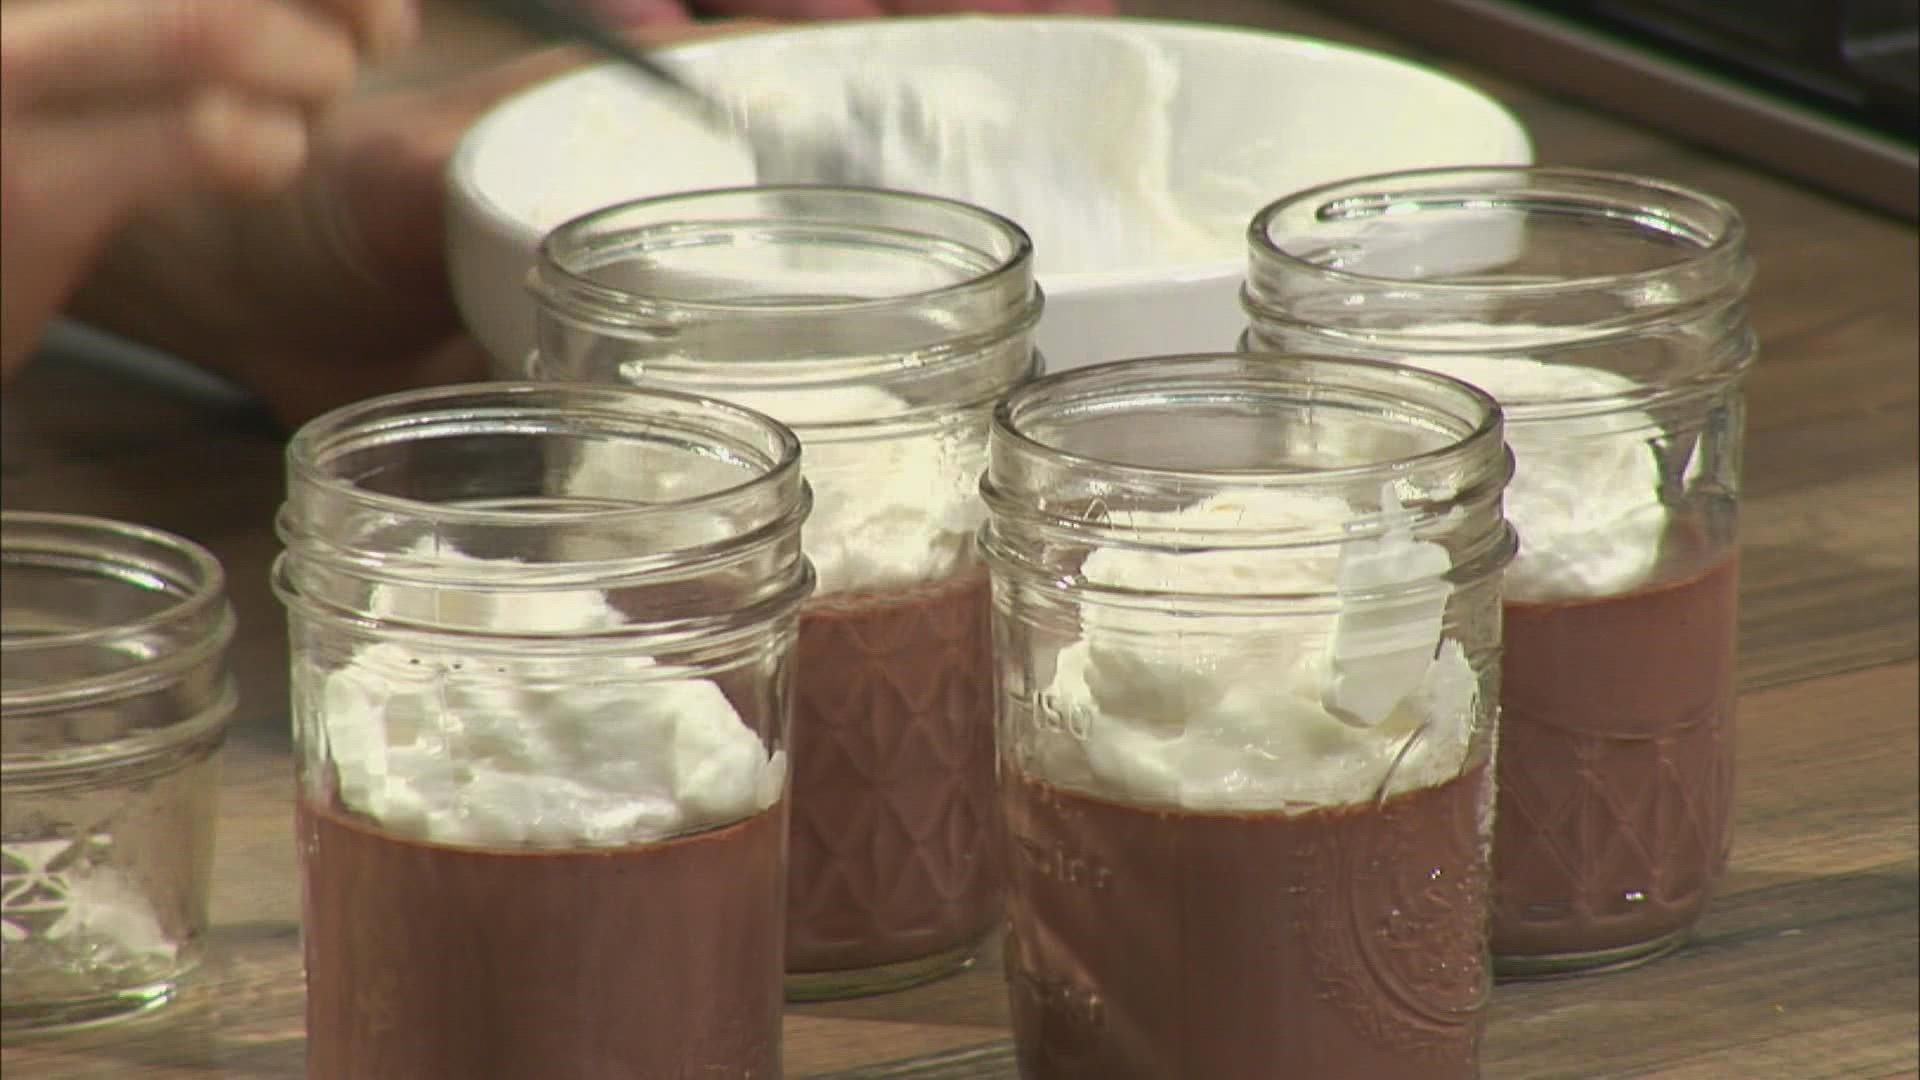 Bonnie Foehr, the executive chef at Bixby Chocolate shows us how to make Pots de Crème.